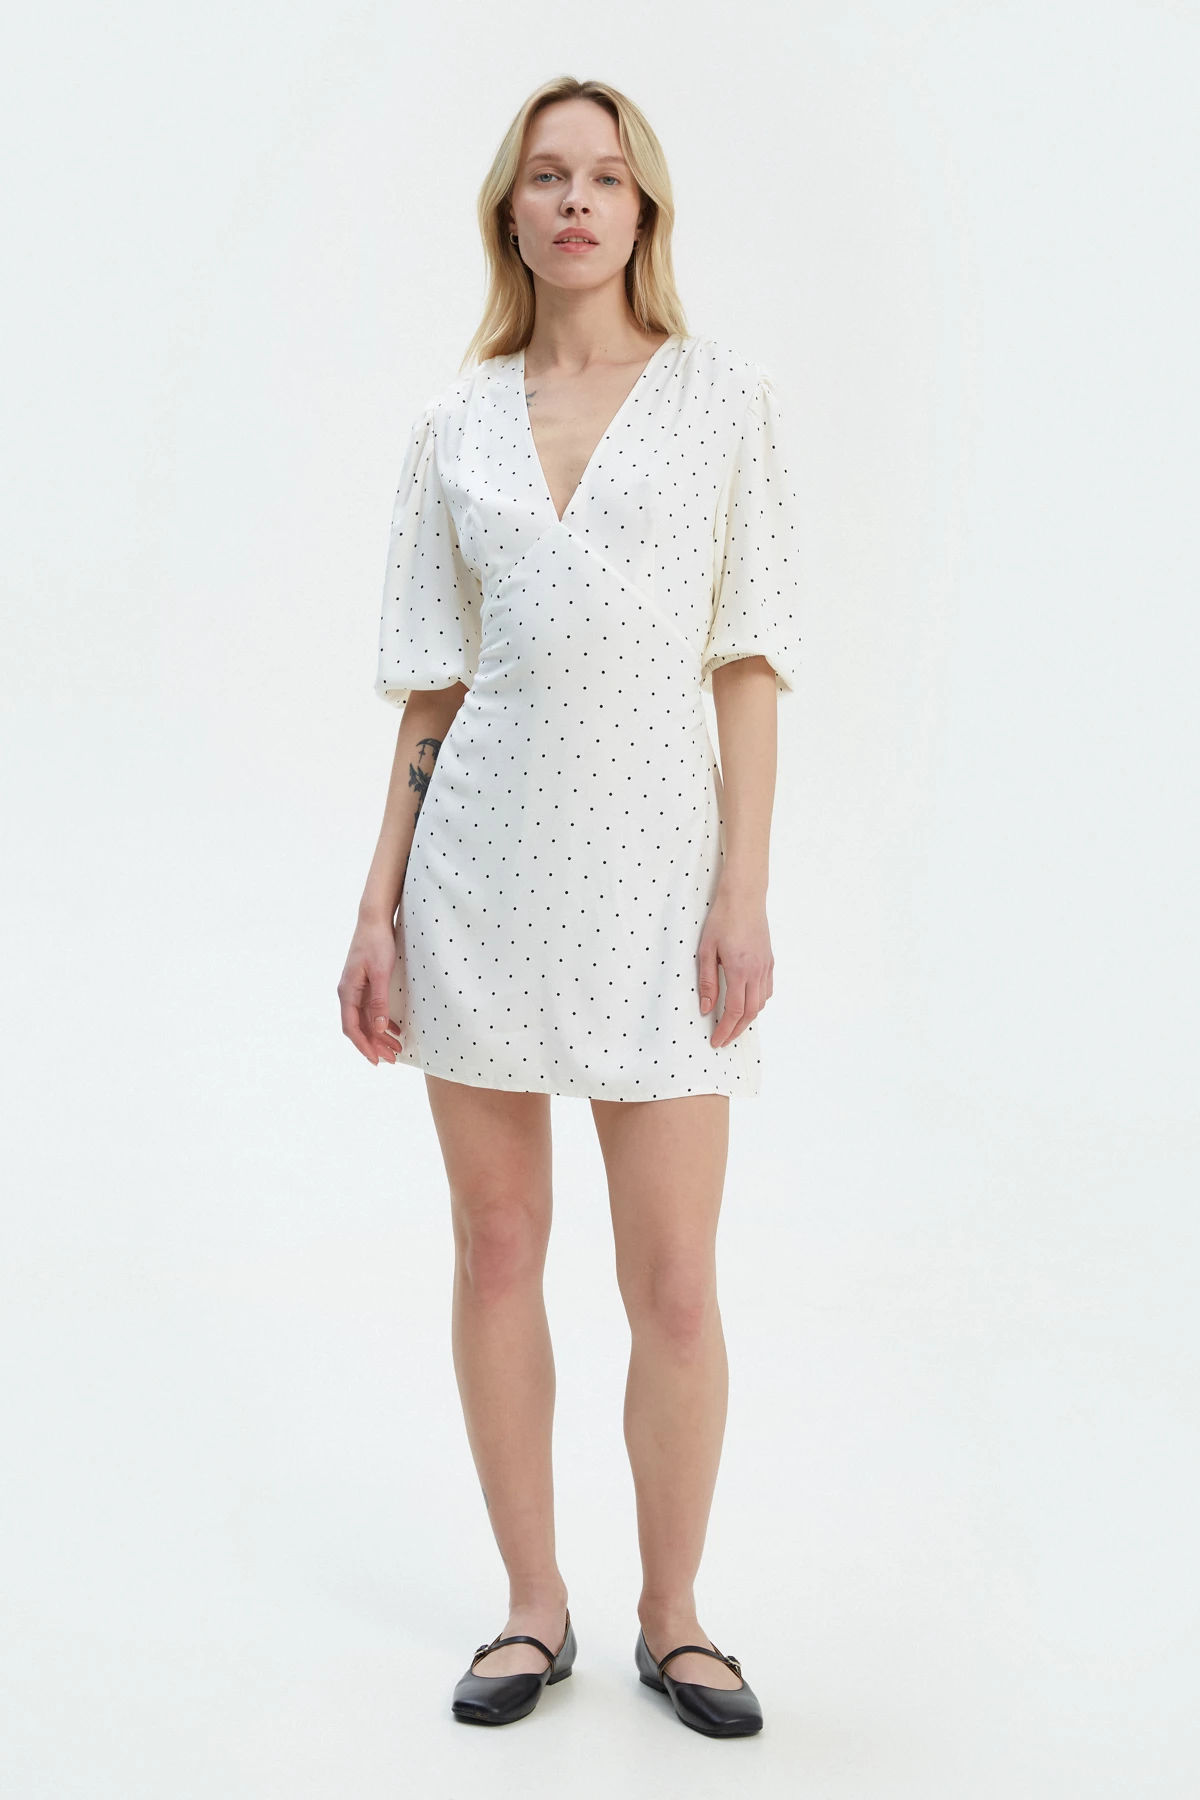 Milky viscose short dress with polka dot print, photo 2